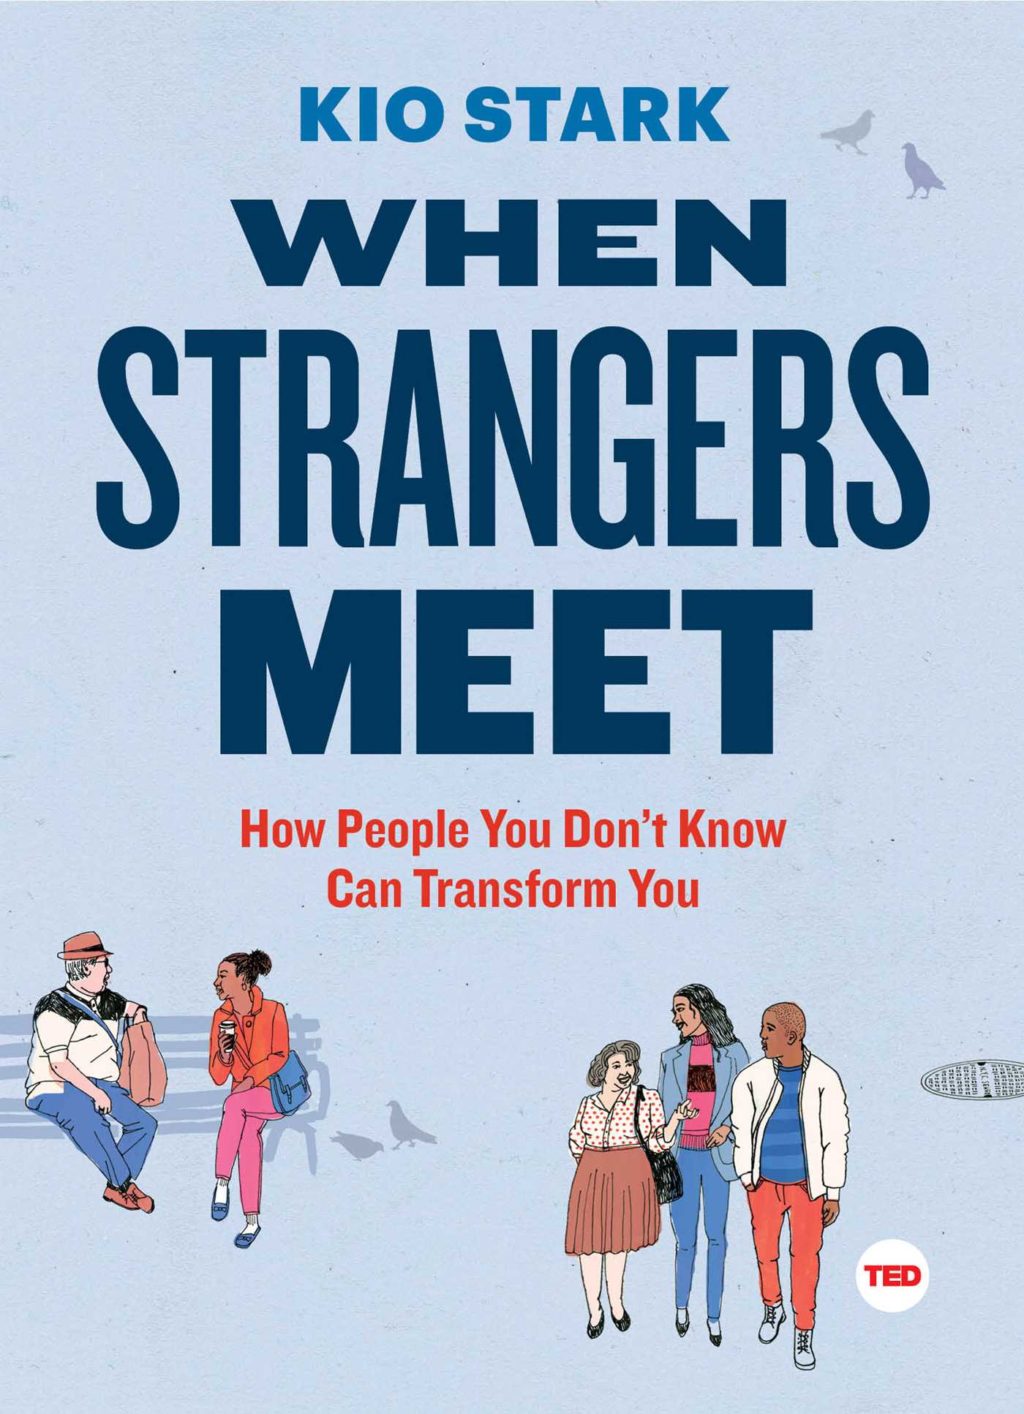 Meet strangers. People you know. We meet at stranger.